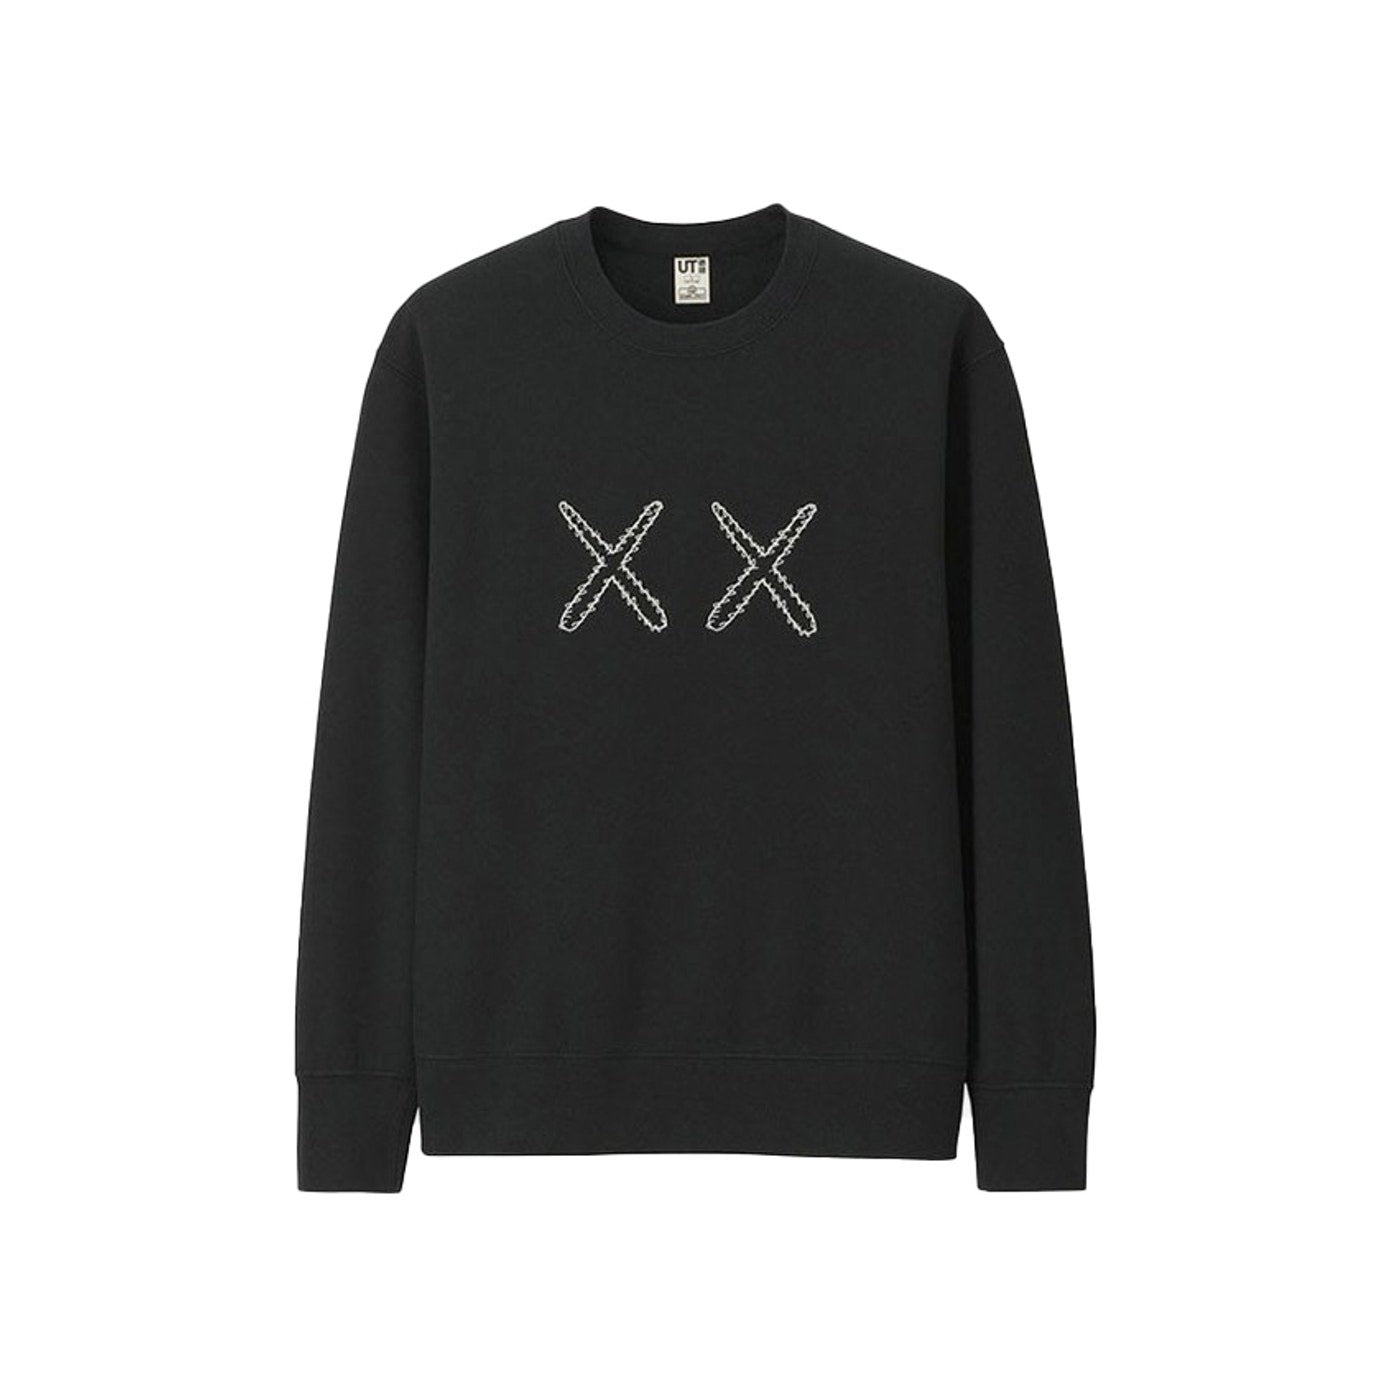 Kaws X Uniqlo Swearshirt Black - Centrall Online